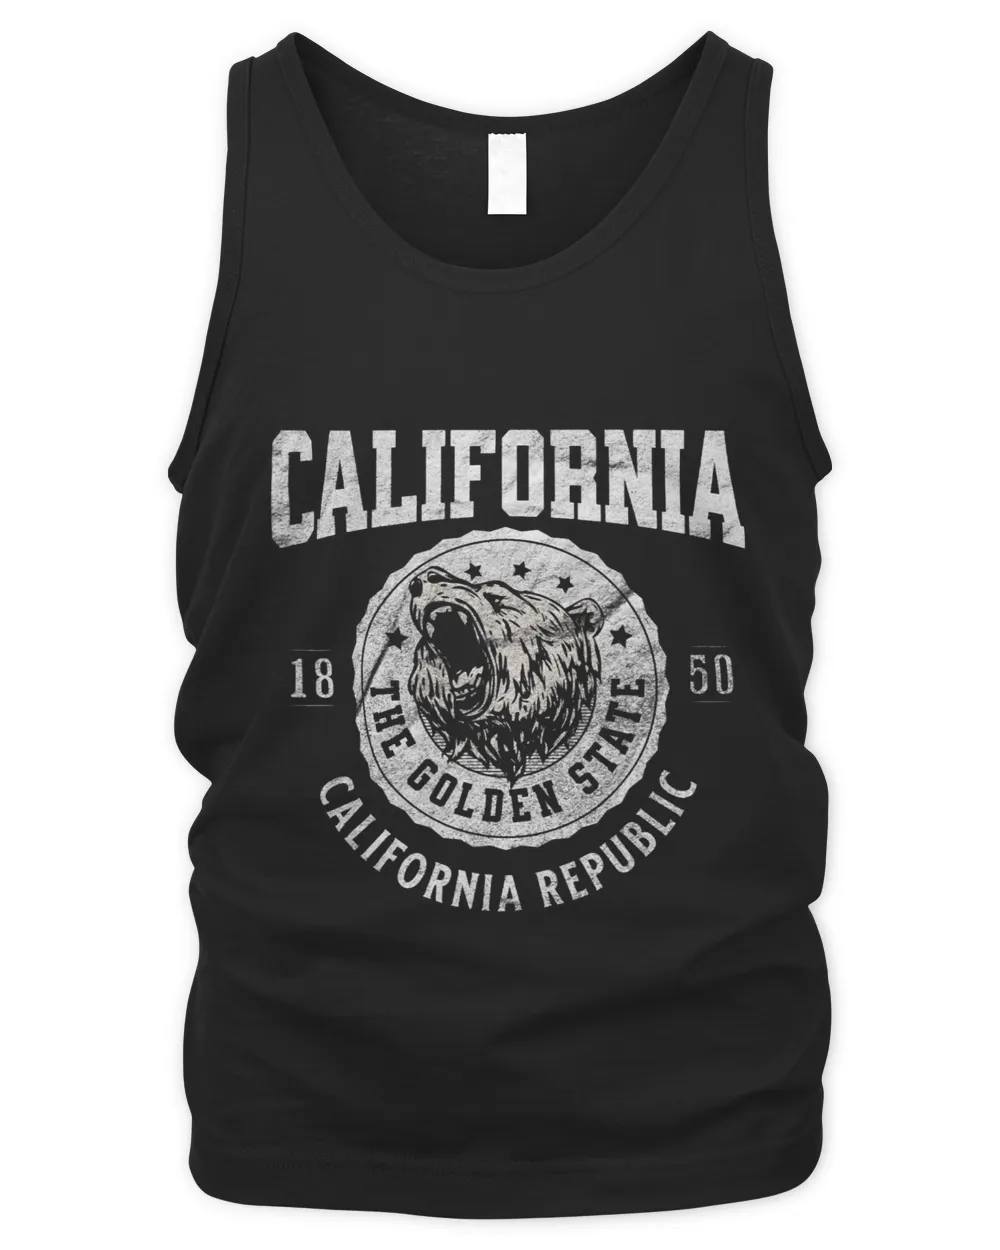 Bears California Golden State Retro California Republic Bear Head